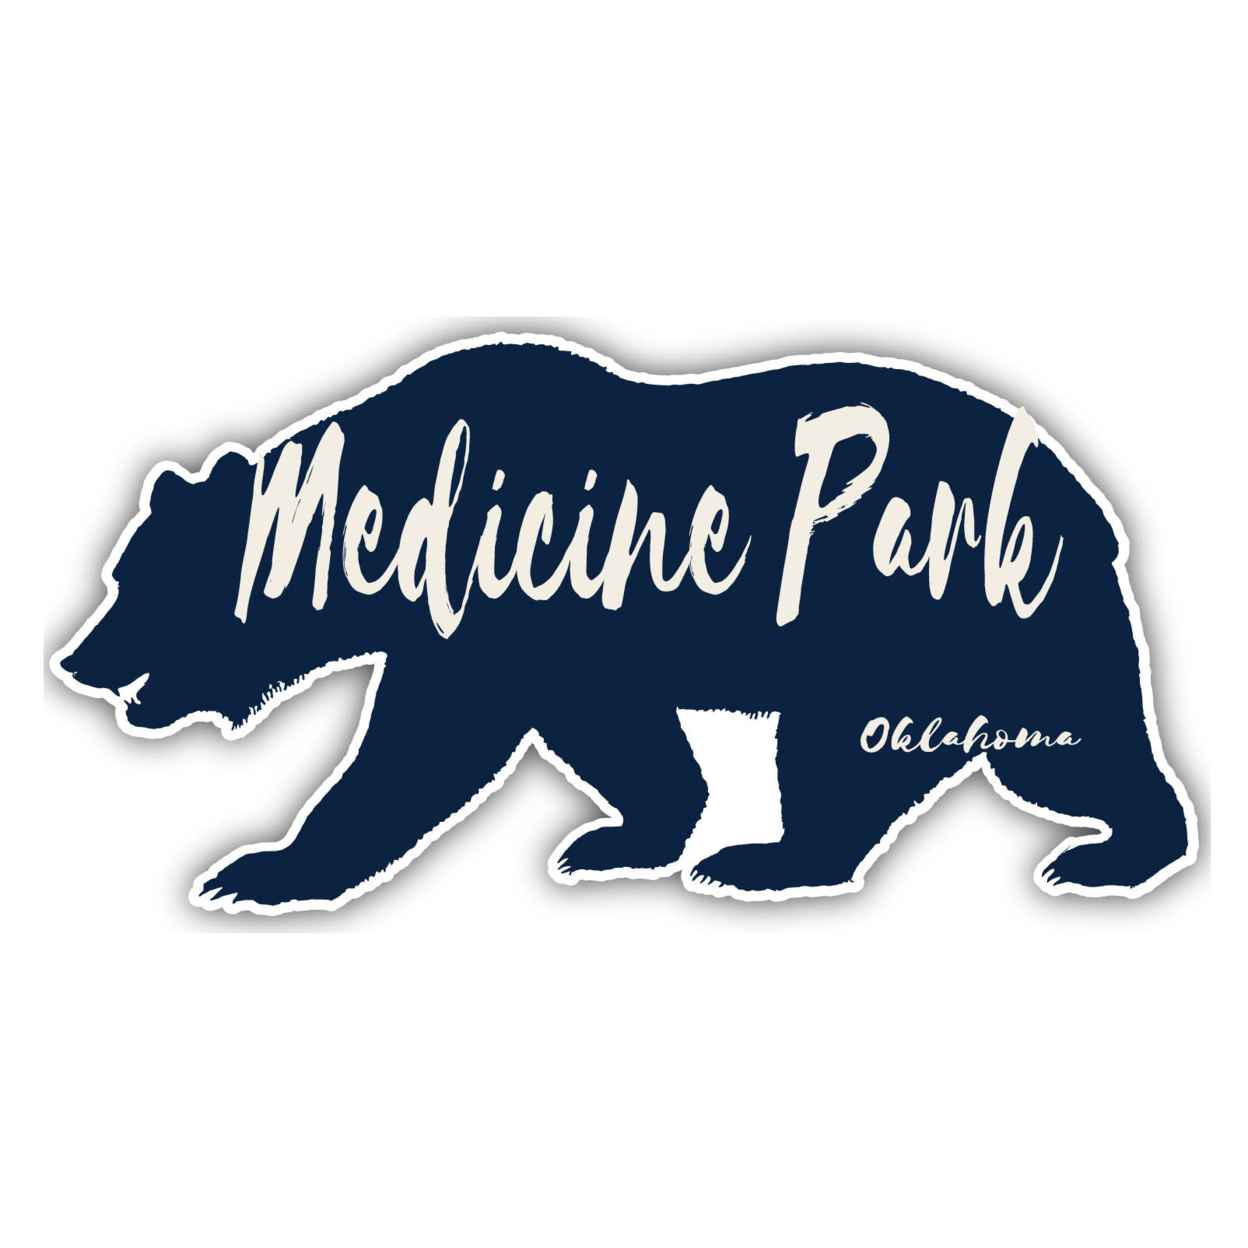 Medicine Park Oklahoma Souvenir Decorative Stickers (Choose Theme And Size) - 2-Inch, Tent